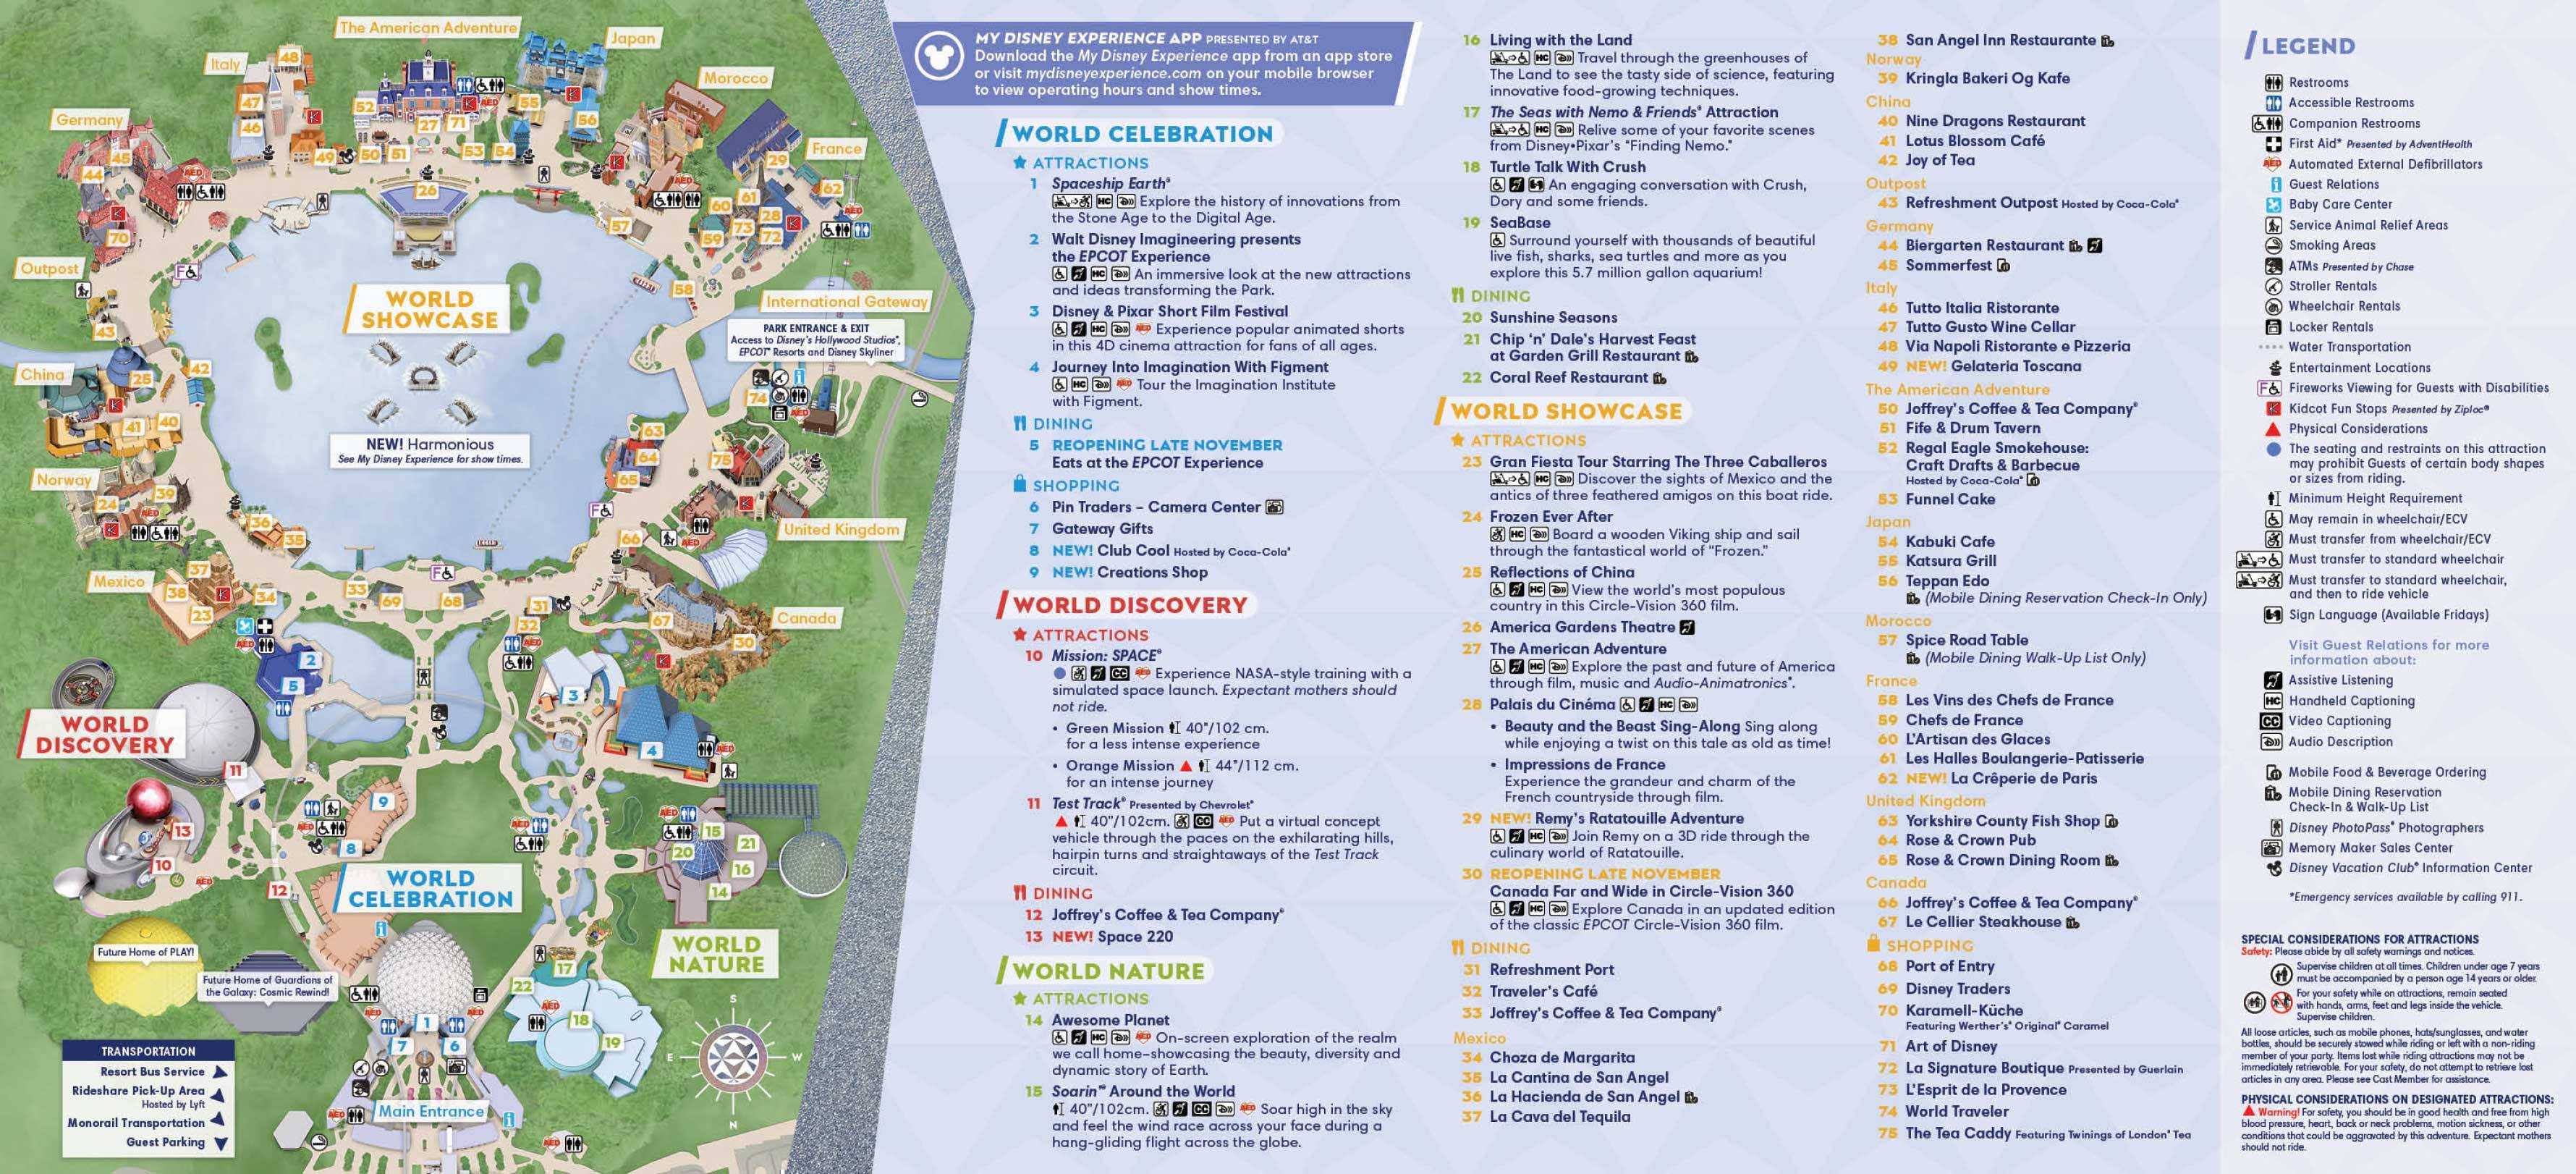 Walt Disney World 50th anniversary map - Epcot back